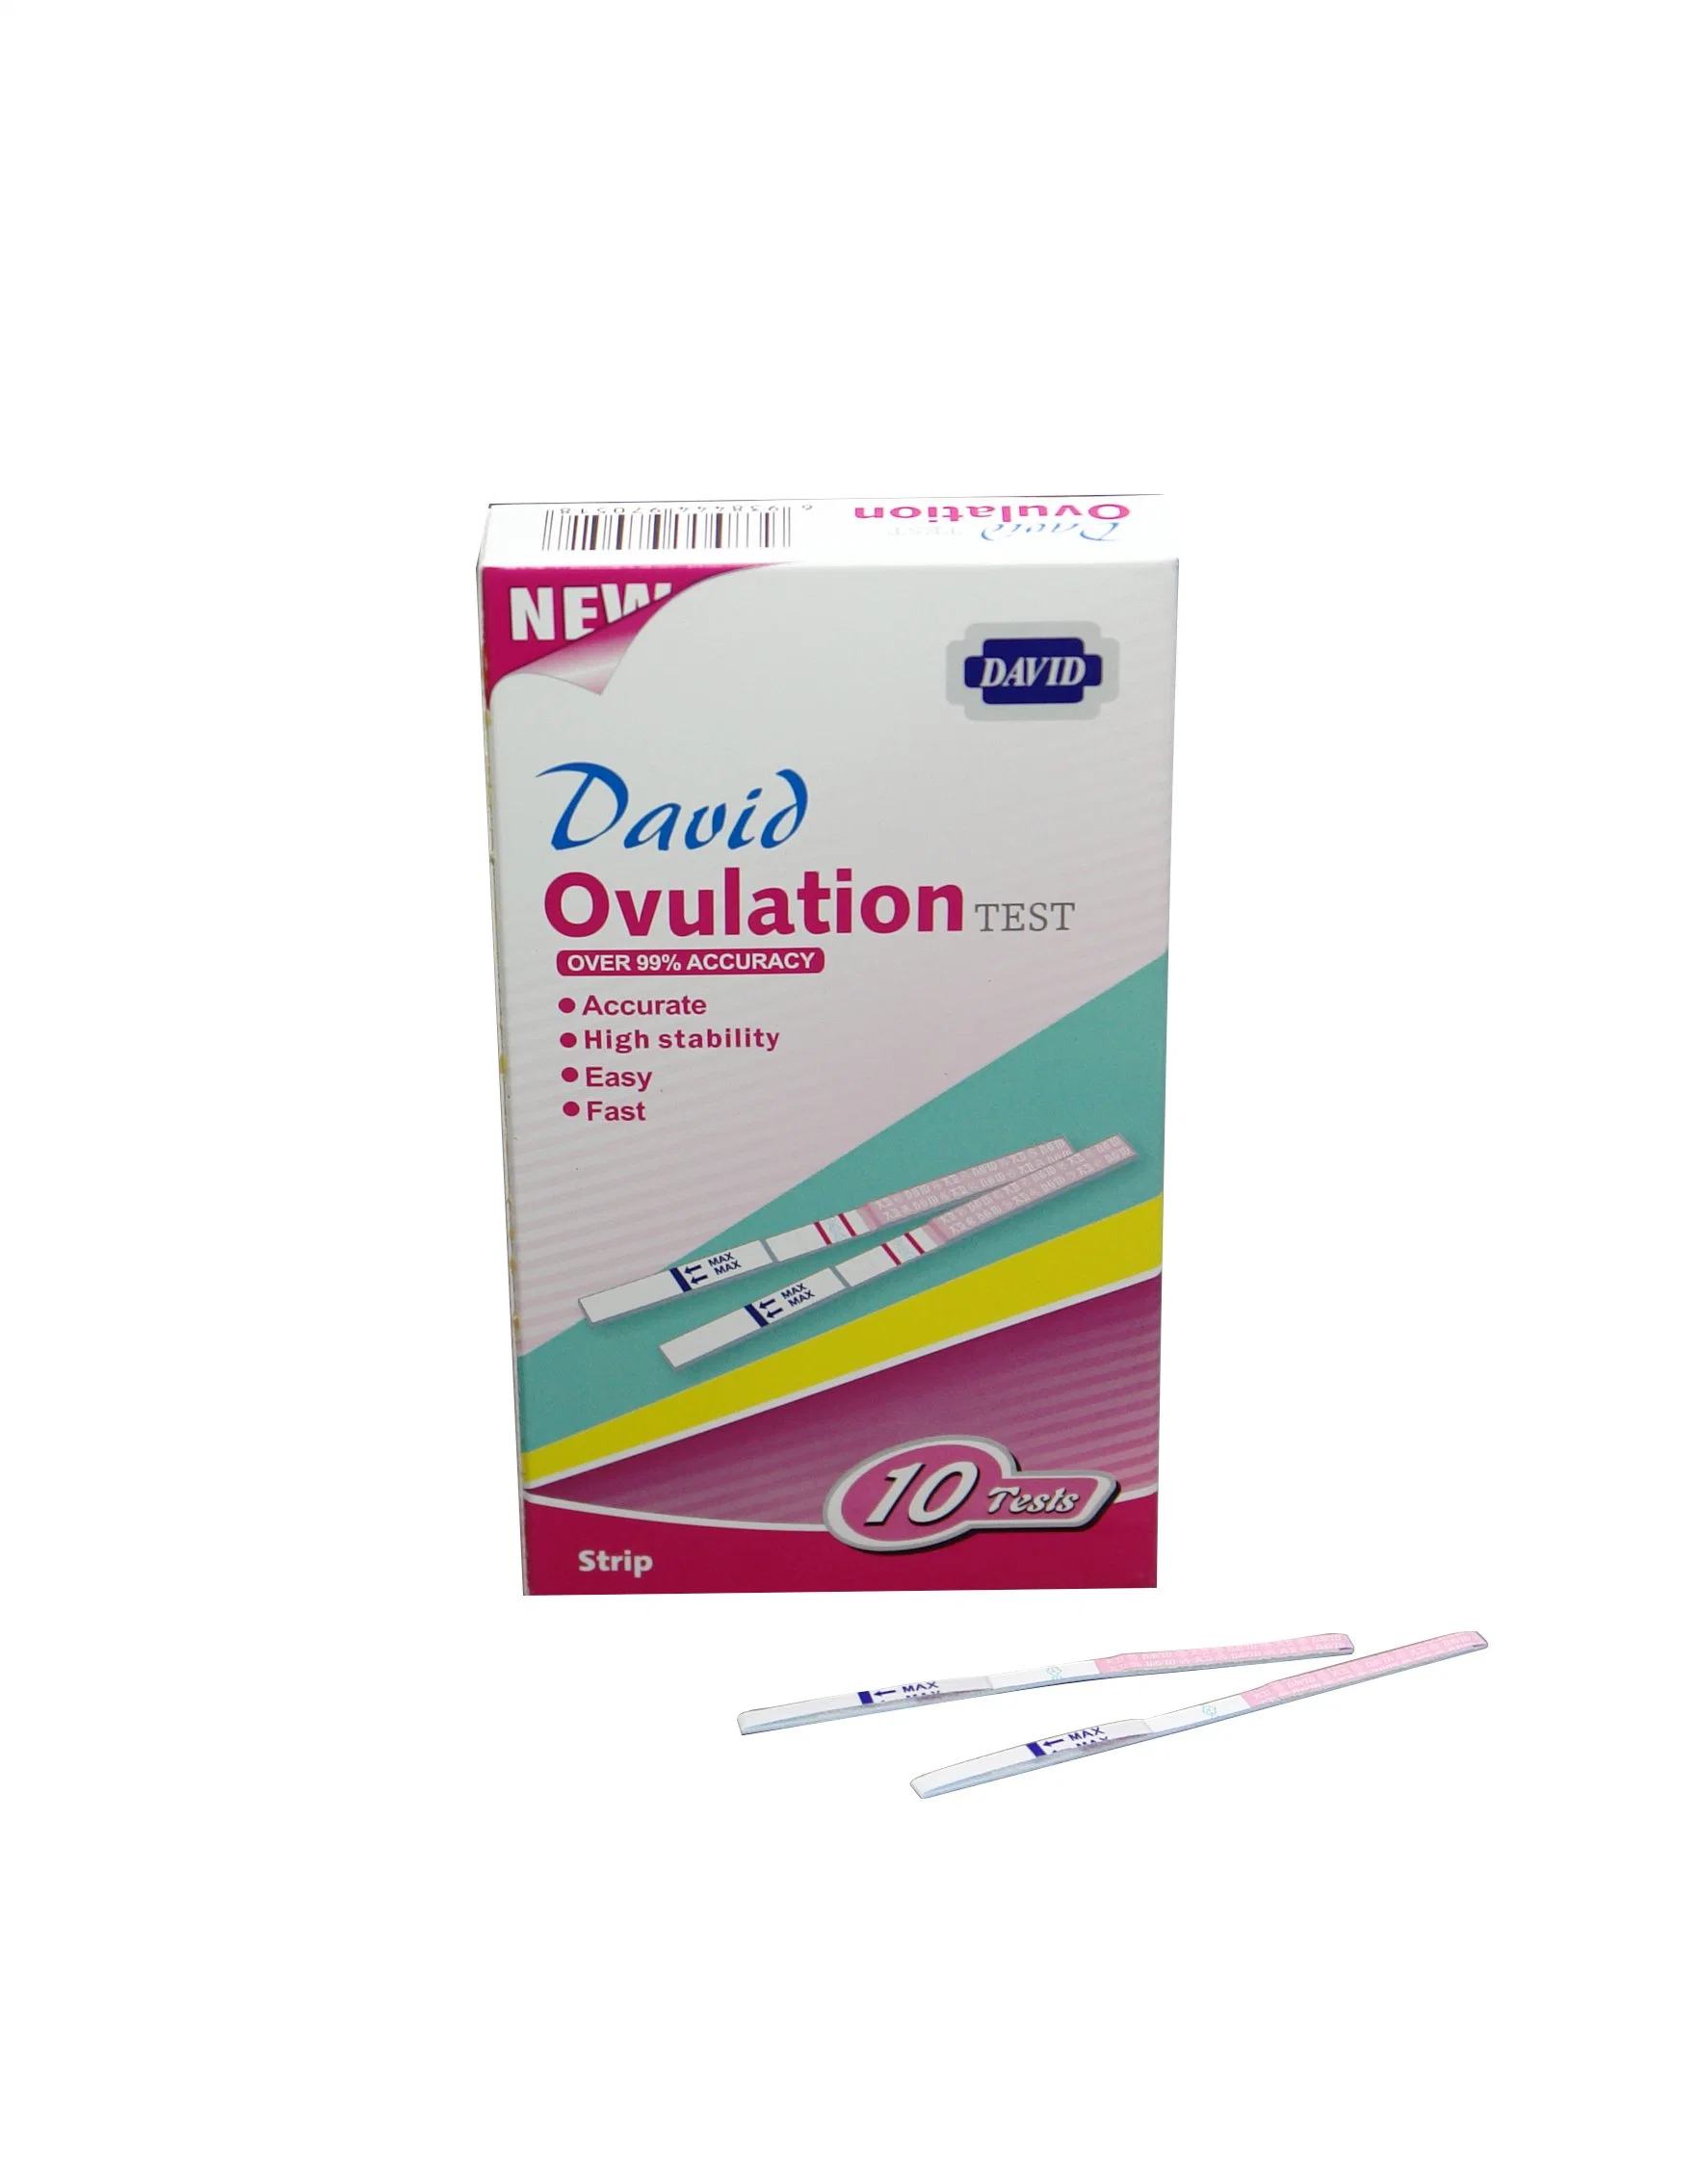 David 99% Accuracy OEM Home Use Urine Lh Ovulation Test Kit